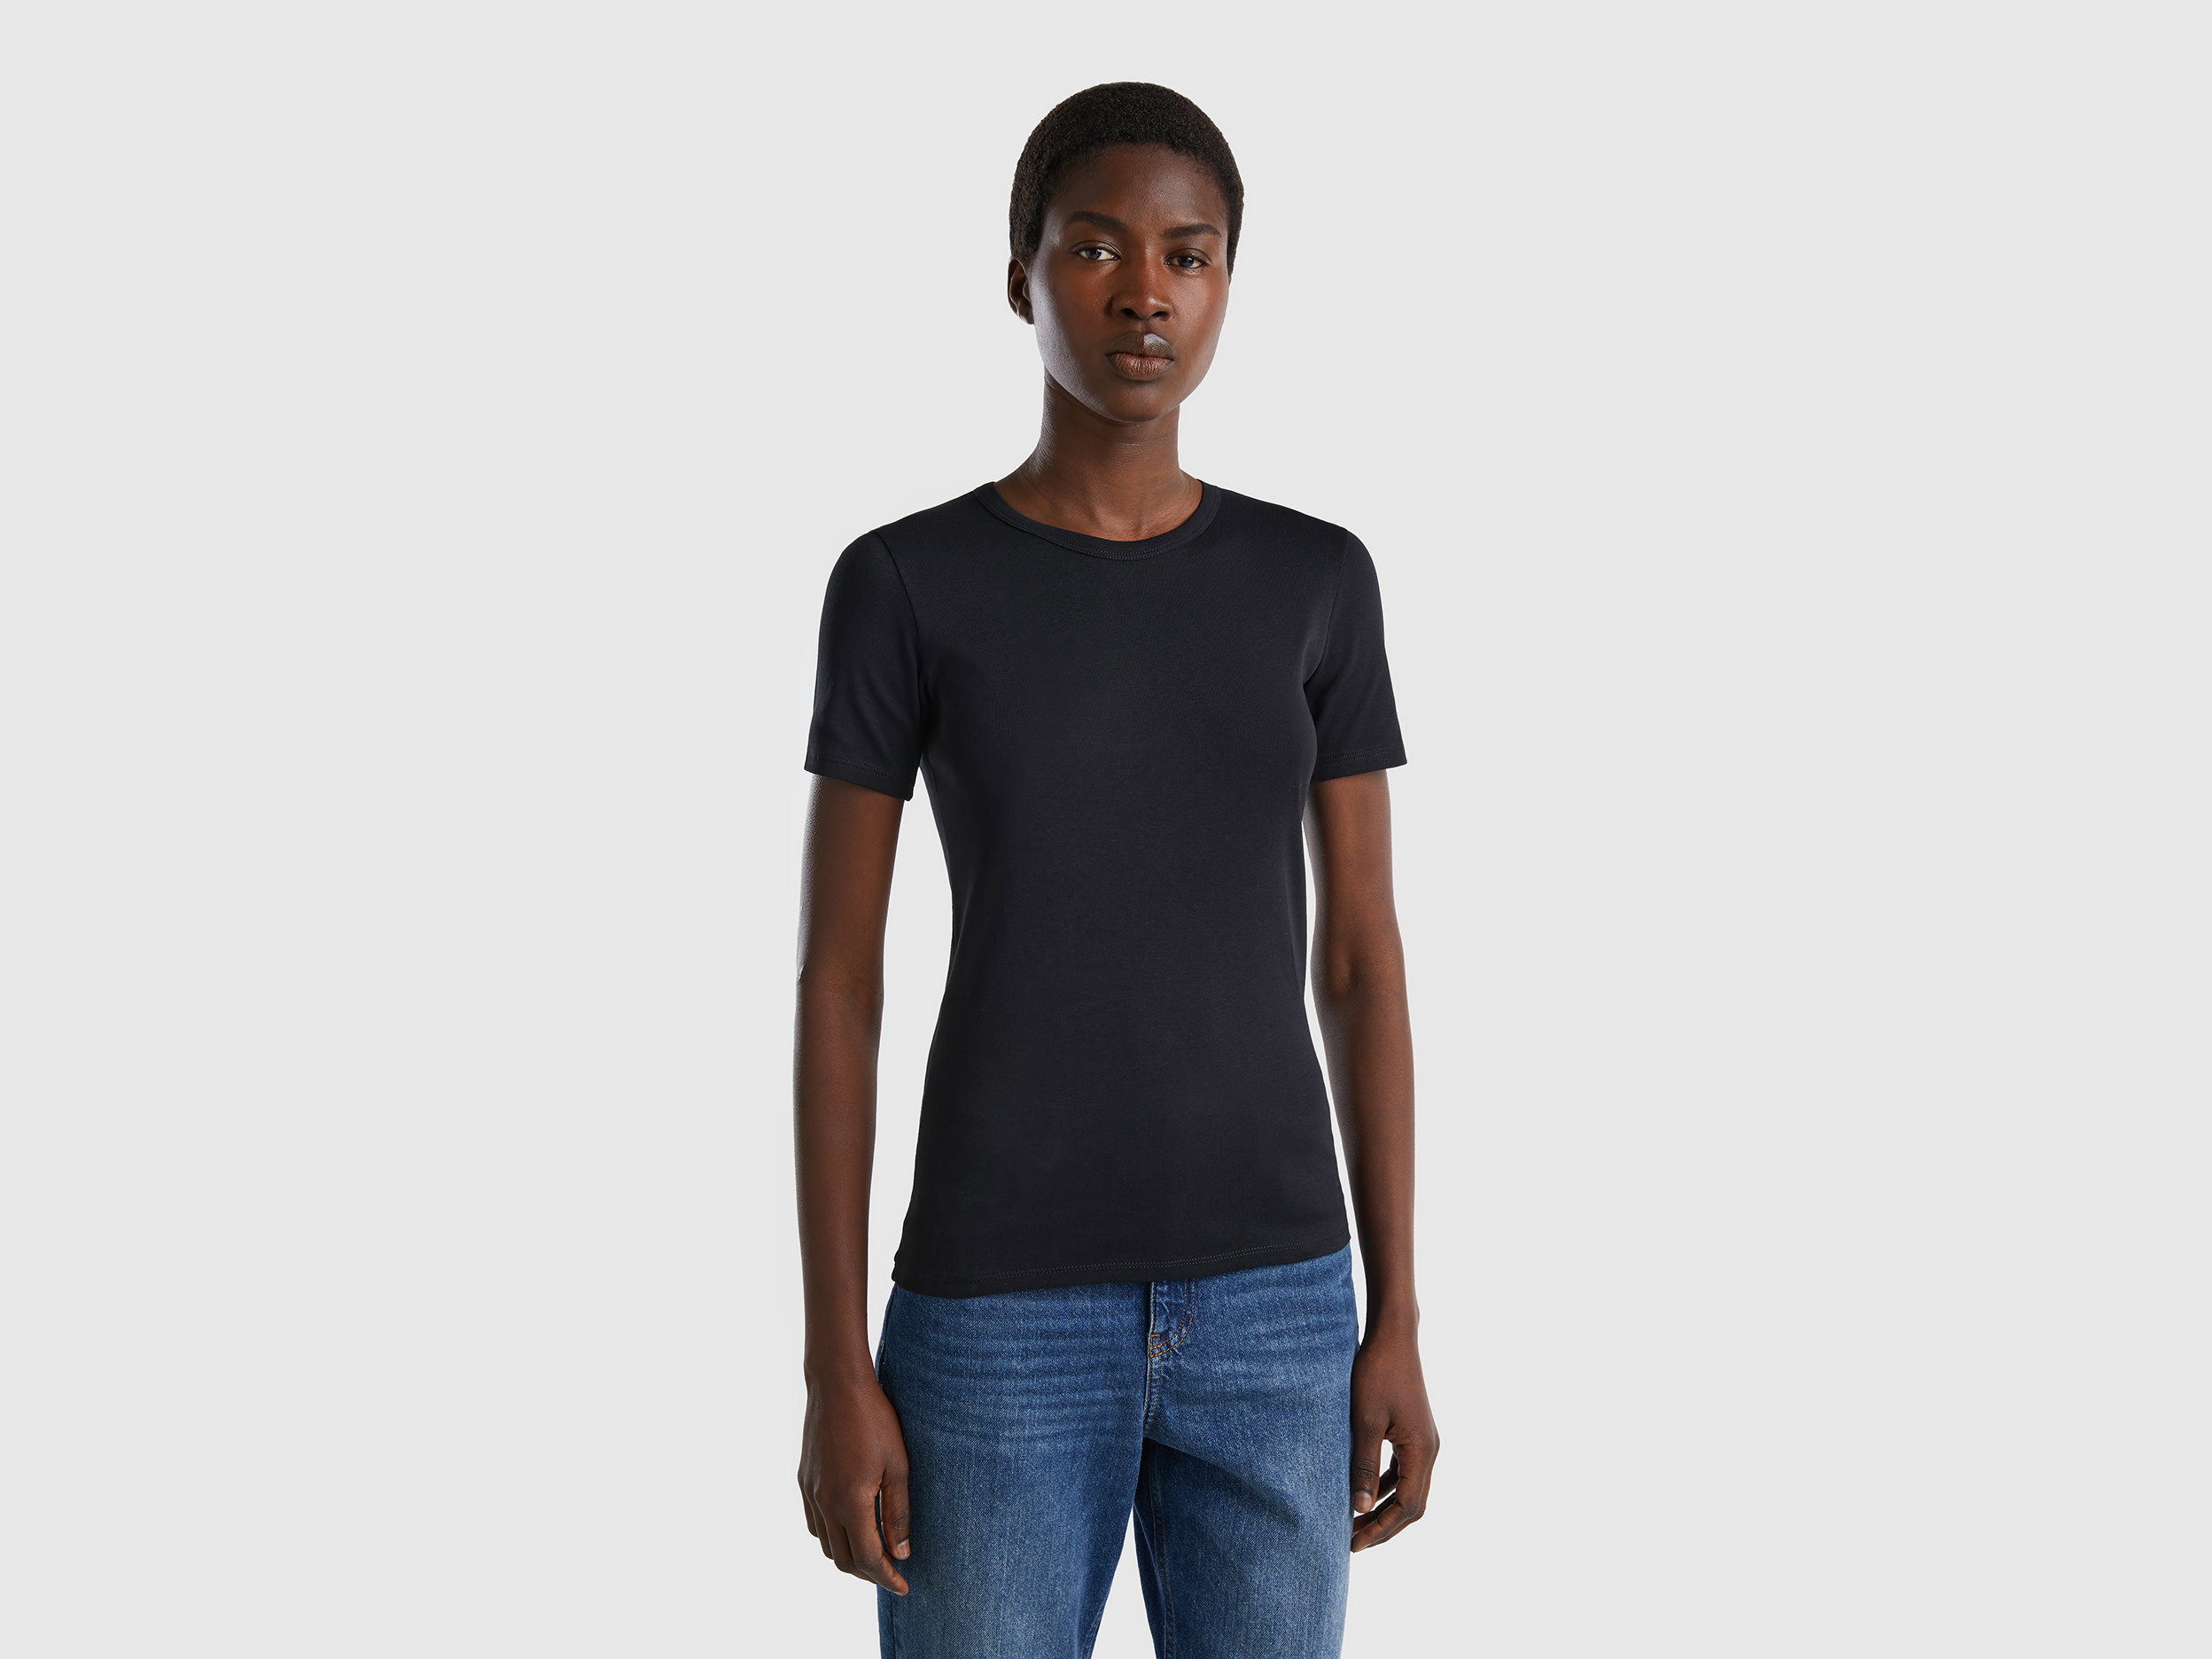 Benetton, Long Fiber Cotton T-shirt, size M, Black, Women